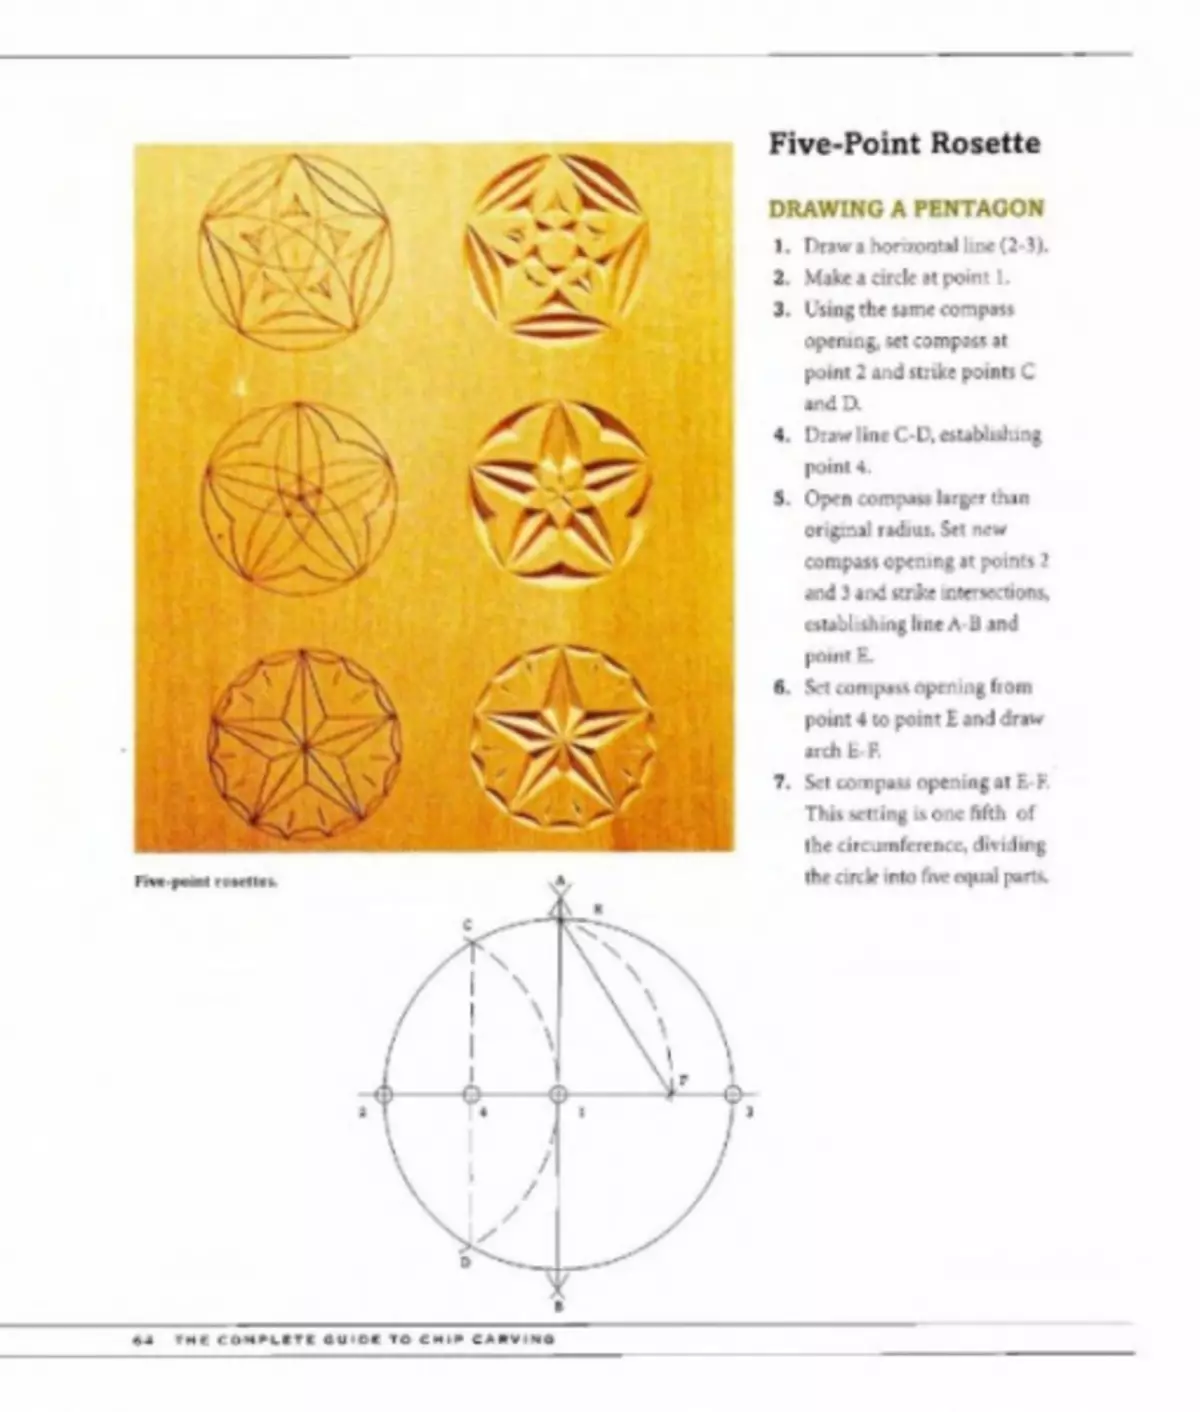 Disegni per filo di legno - più di 100 schizzi